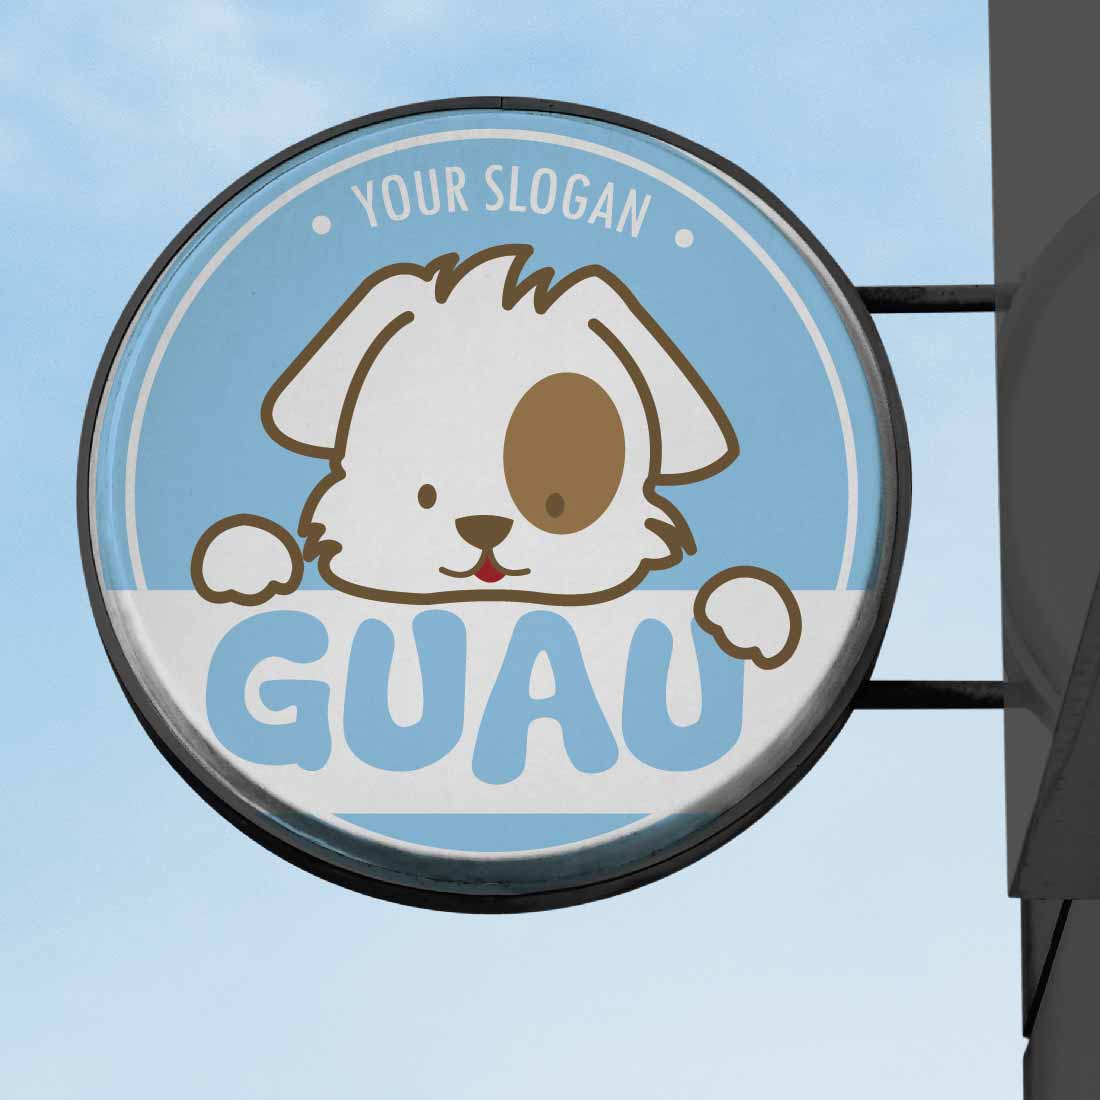 Kawaii dog logo for petshop or veterinary preview image.